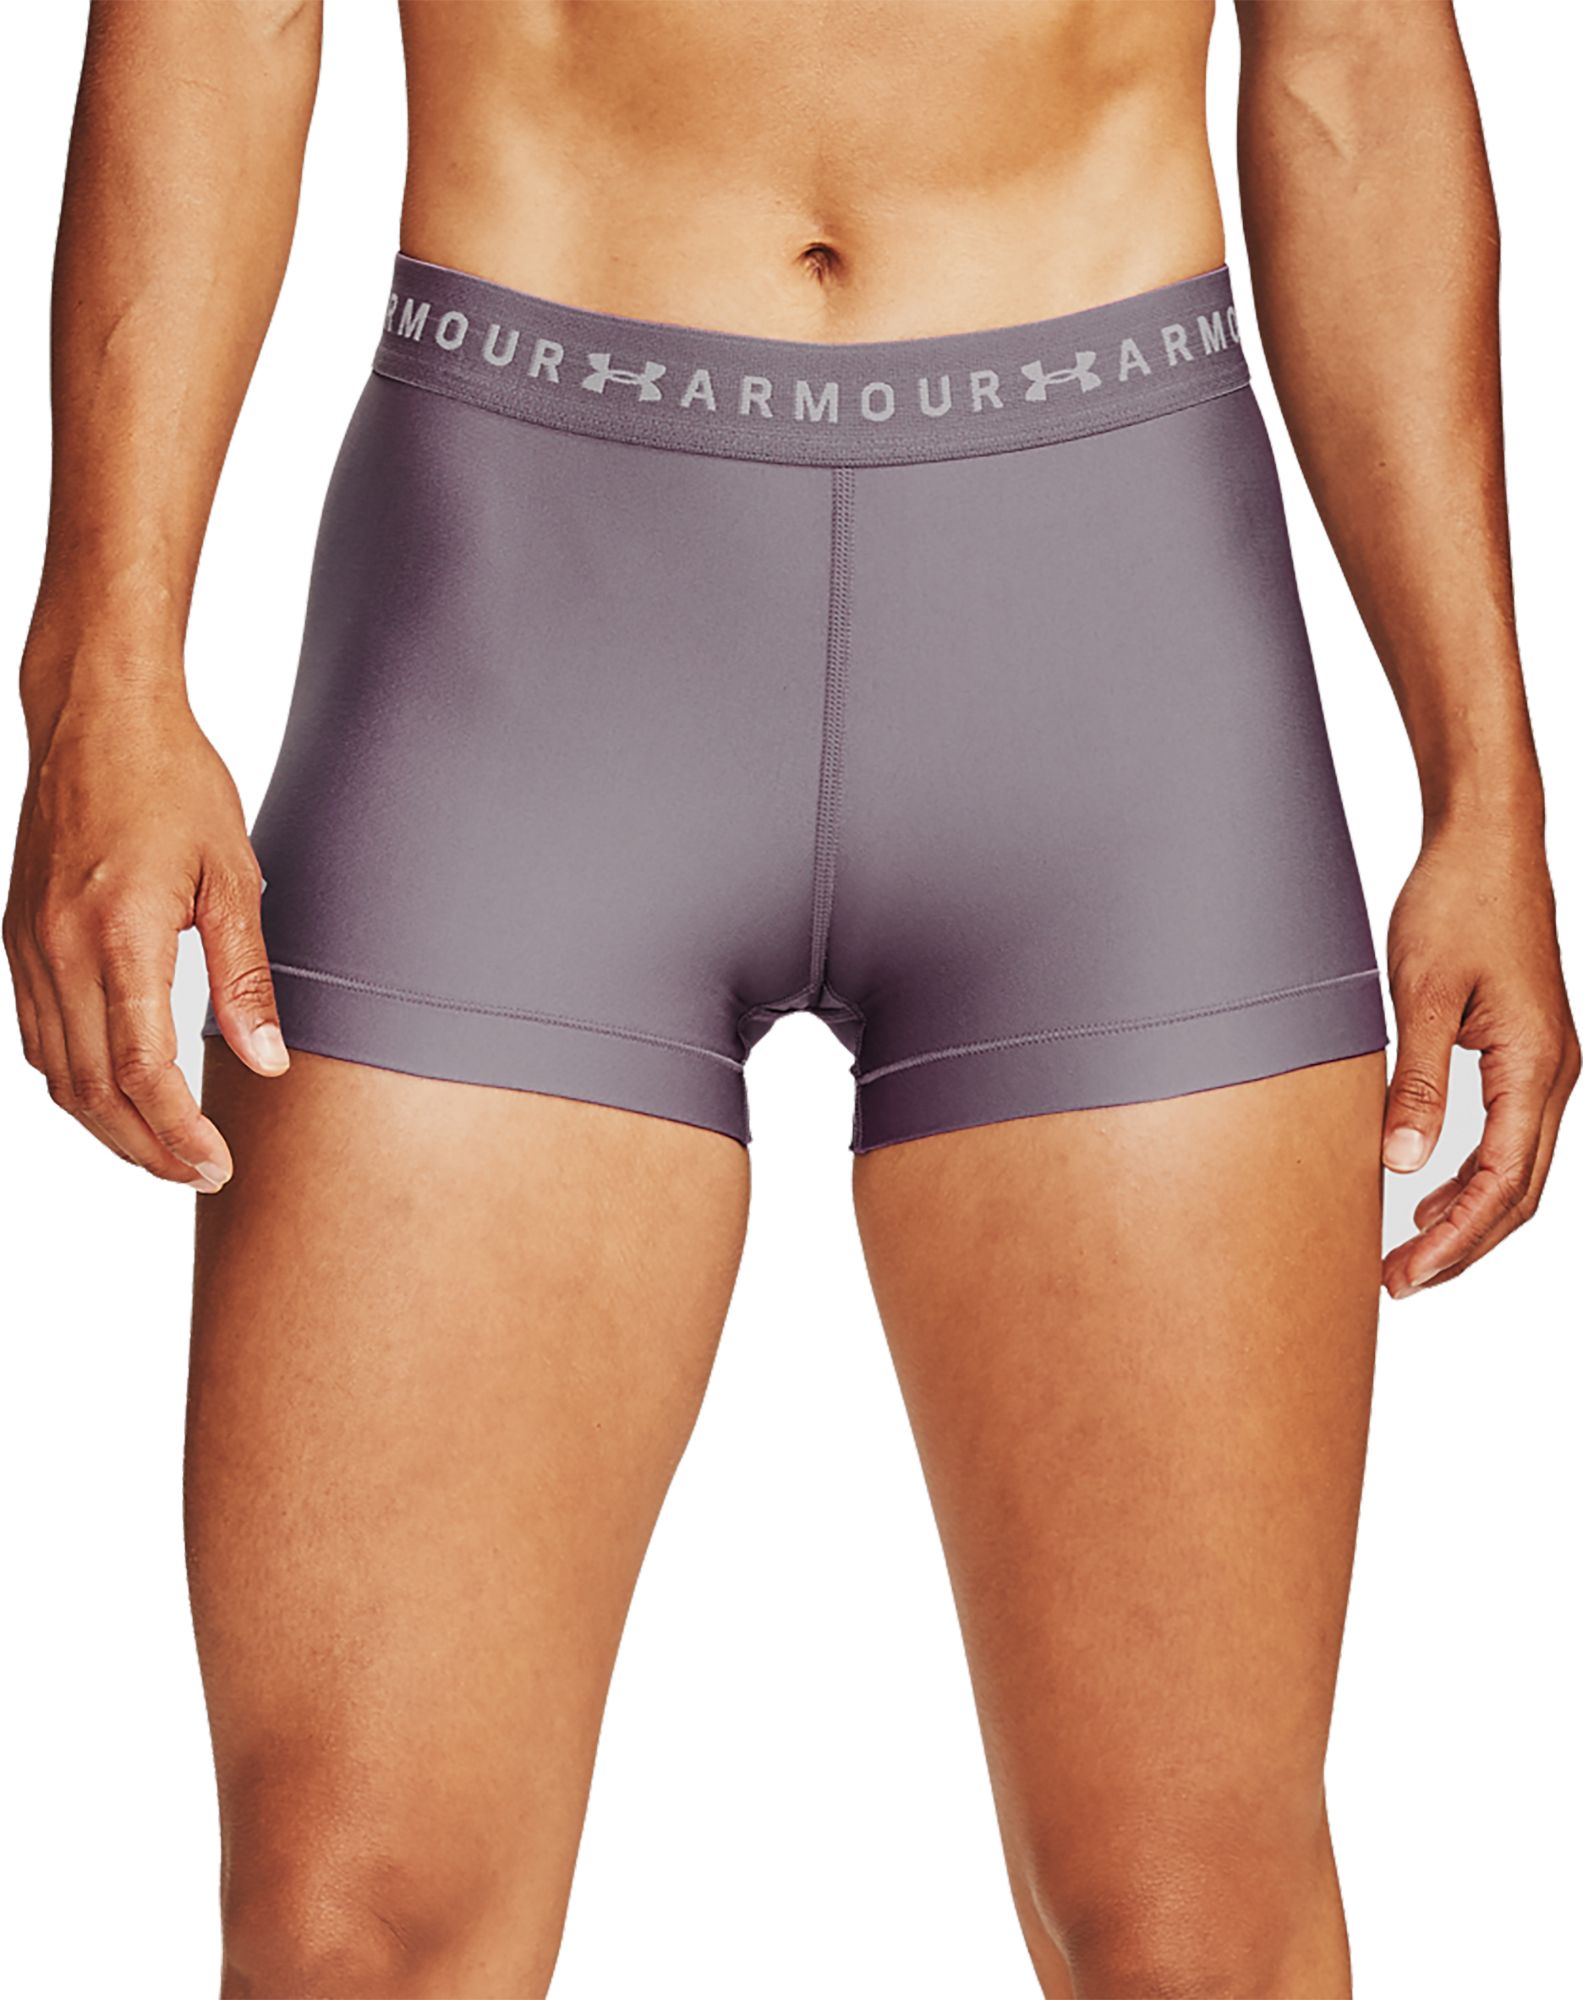 Under Armour Women's HeatGear Armour Shorty Shorts | DICK'S Sporting Goods